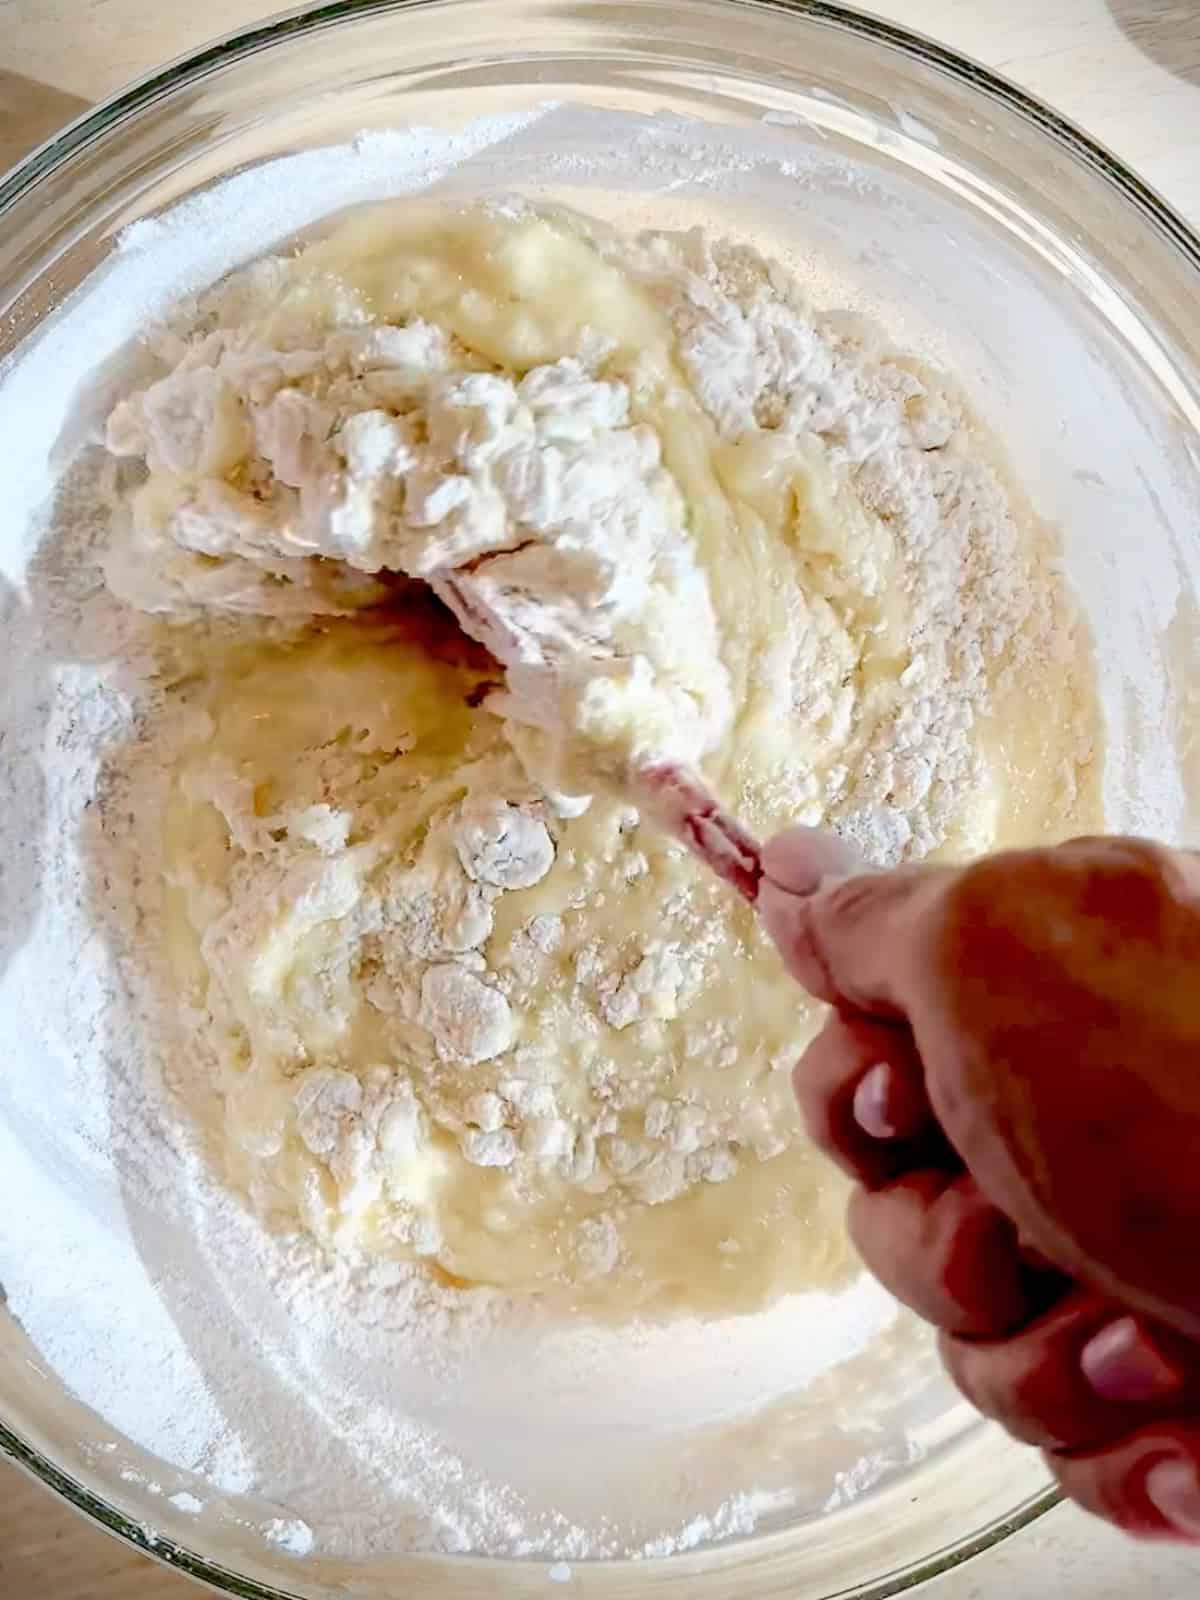 Folding flour into wet ingredients.